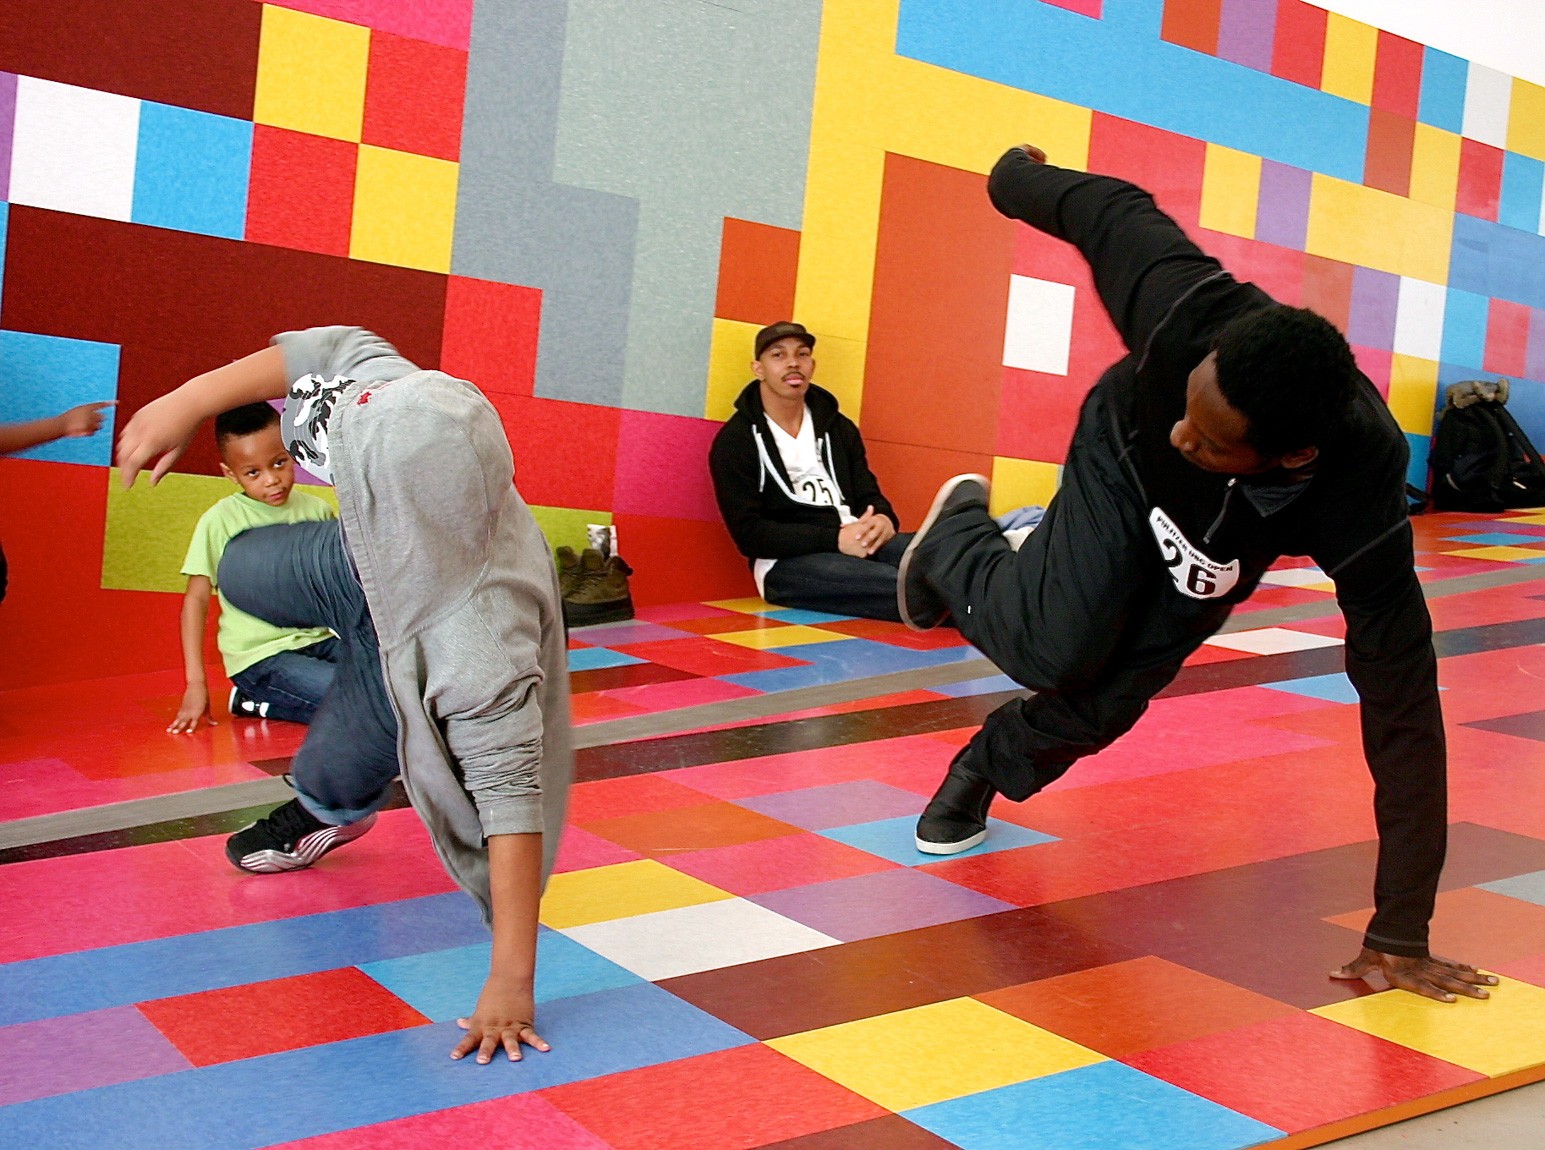 Break dancers perform on the floor of David Scanavino's installation "Candy Crush."